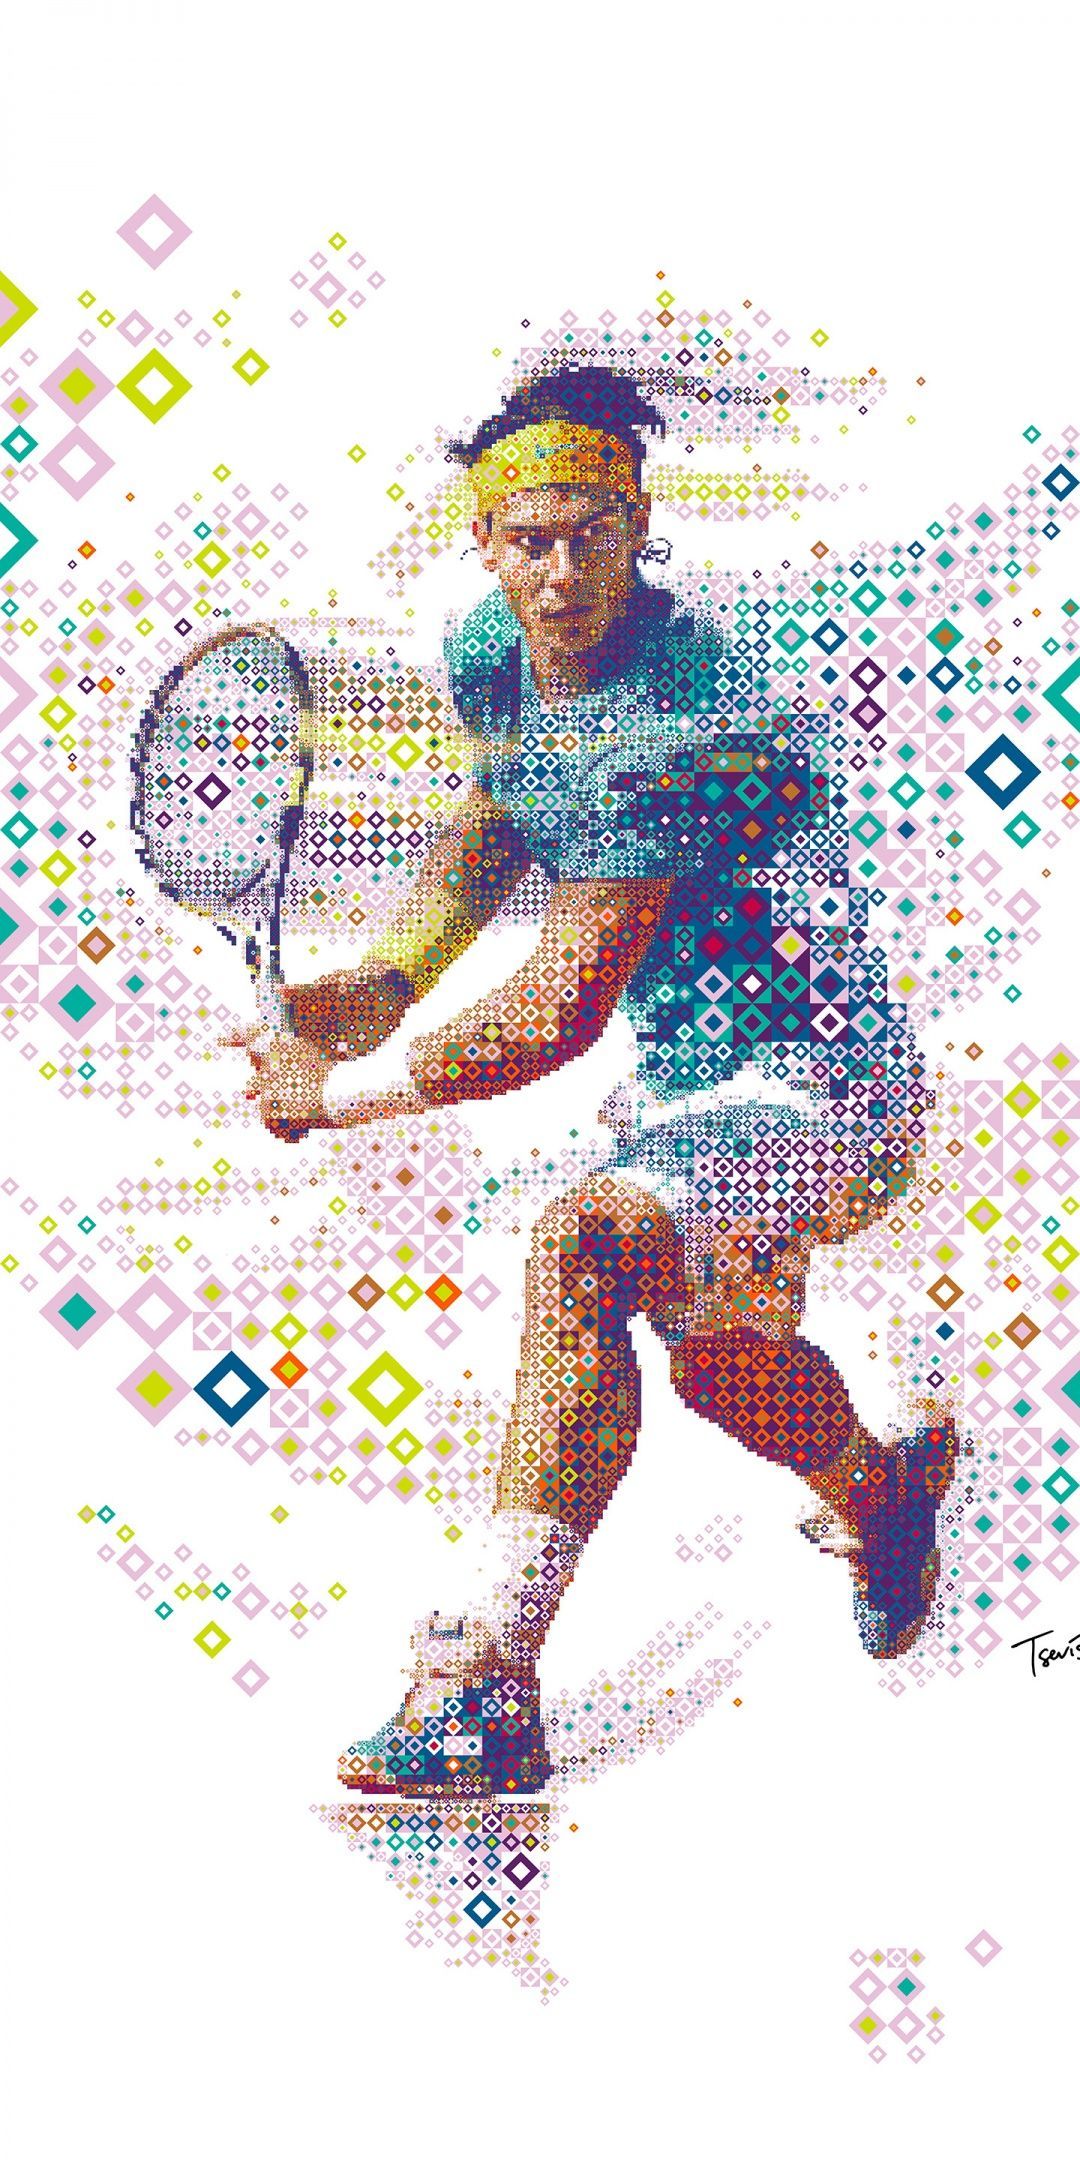 Rafael Nadal Wallpaper 4K, Tennis player, Spanish